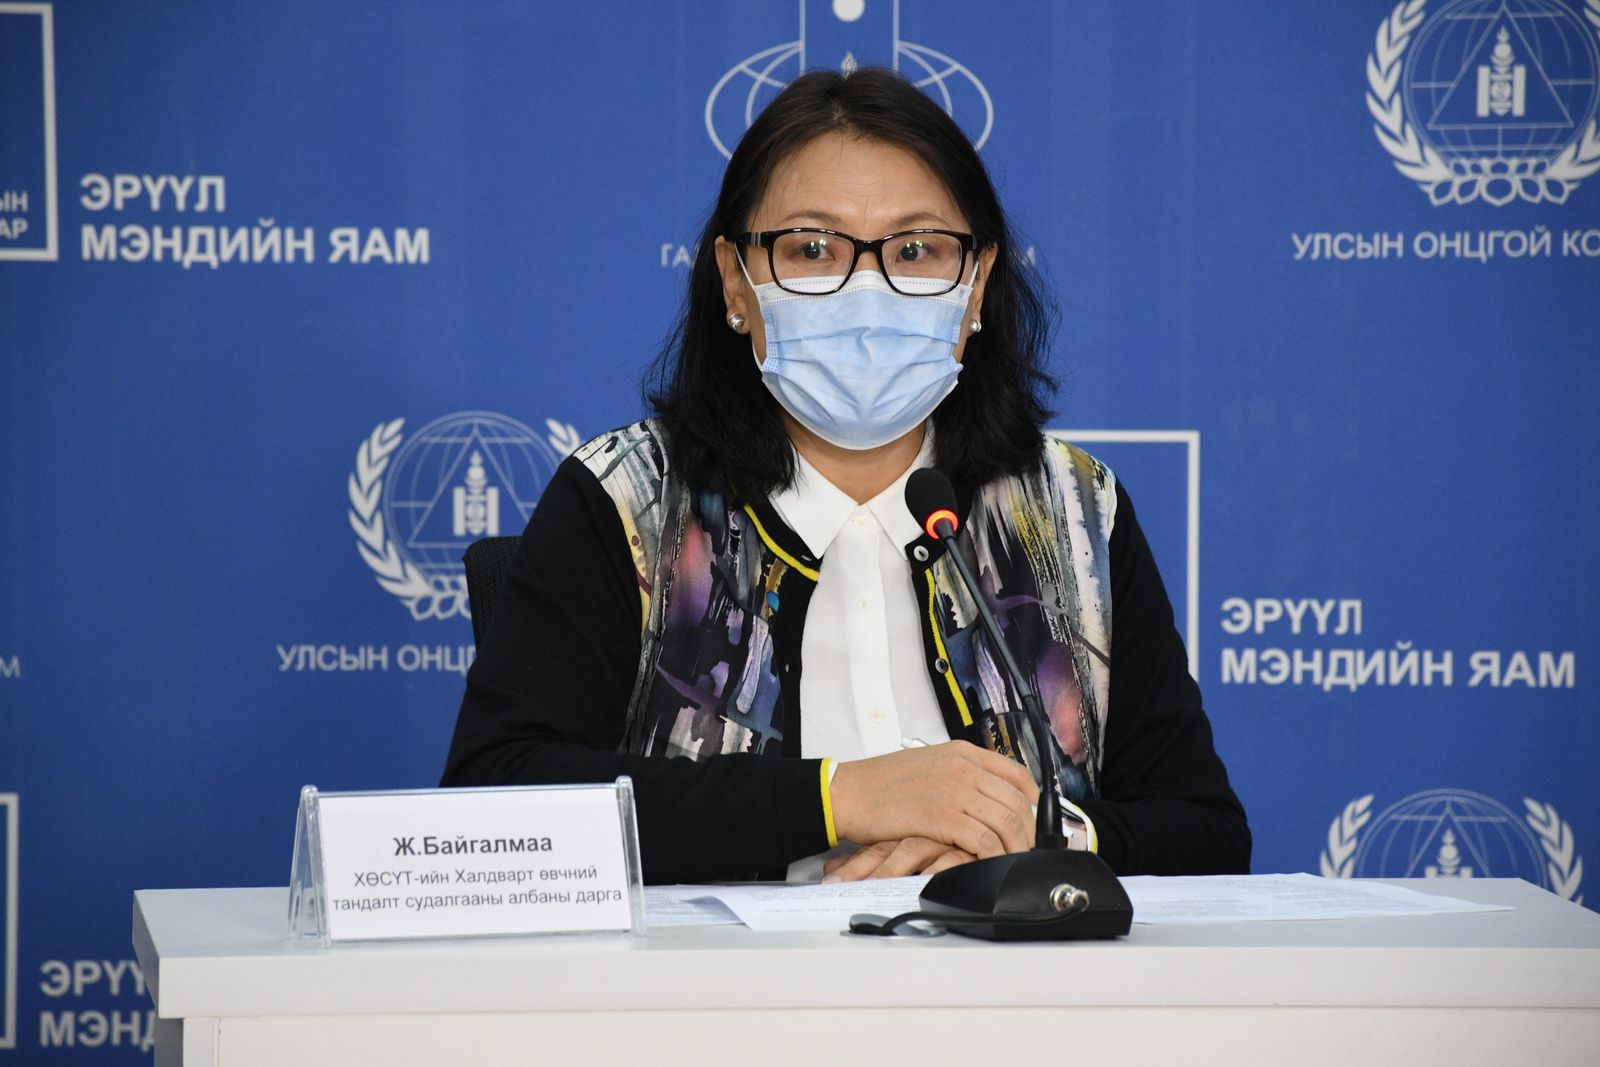 J.Baigalmaa, 몽골에서 0~17세의 1,100명의 어린이들이 감염되었으며, 심각한 상태의 어린이는 없어.jpg